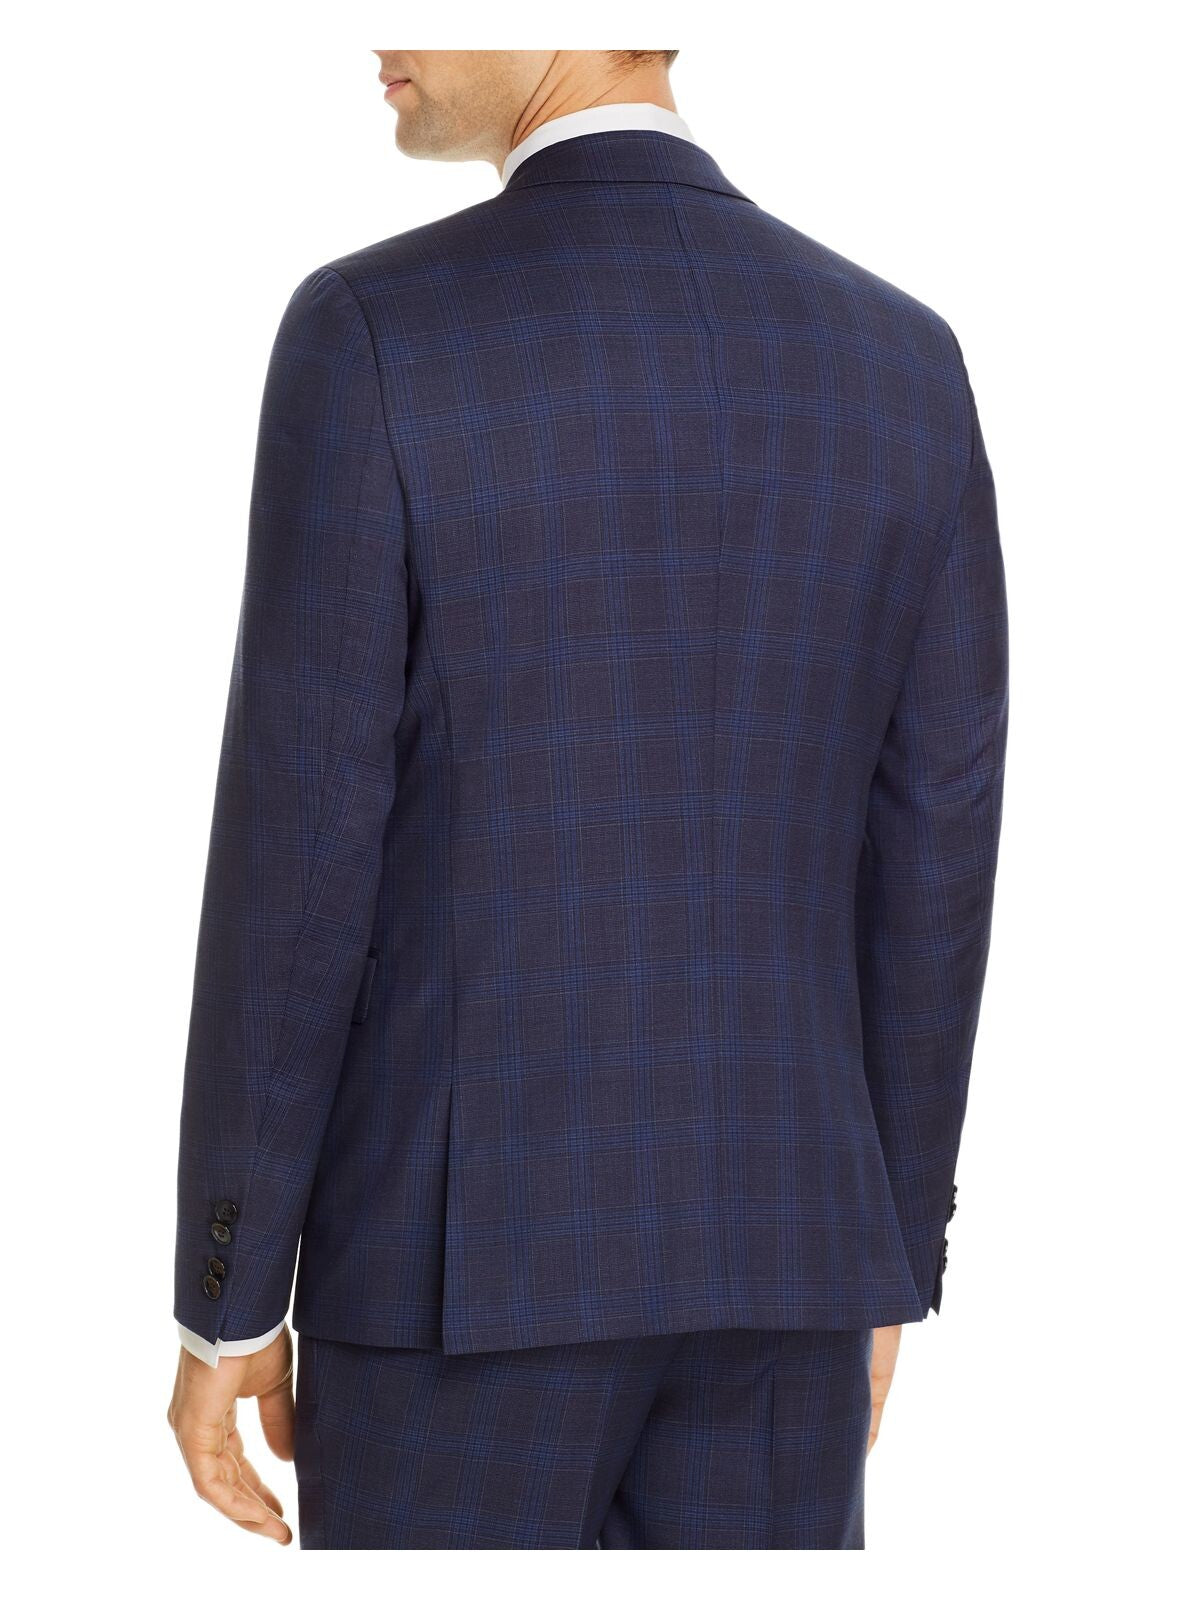 HUGO BOSS Mens Navy Check Extra Slim Fit Suit Separate Blazer Jacket 38R